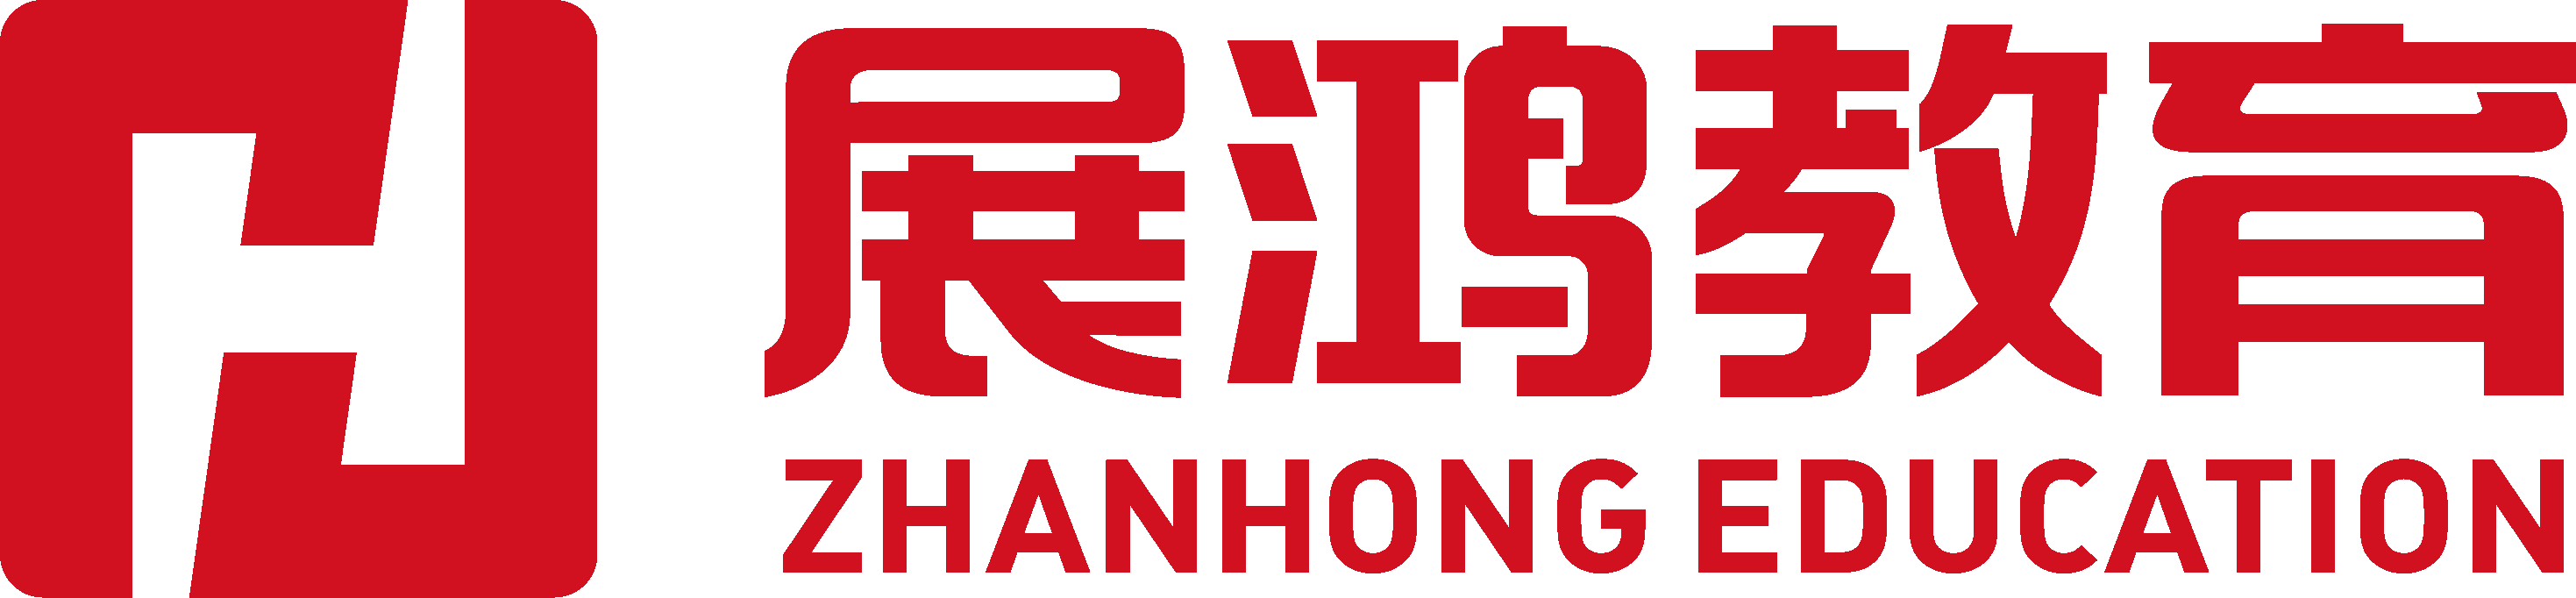 展鴻教育logo-紅.png